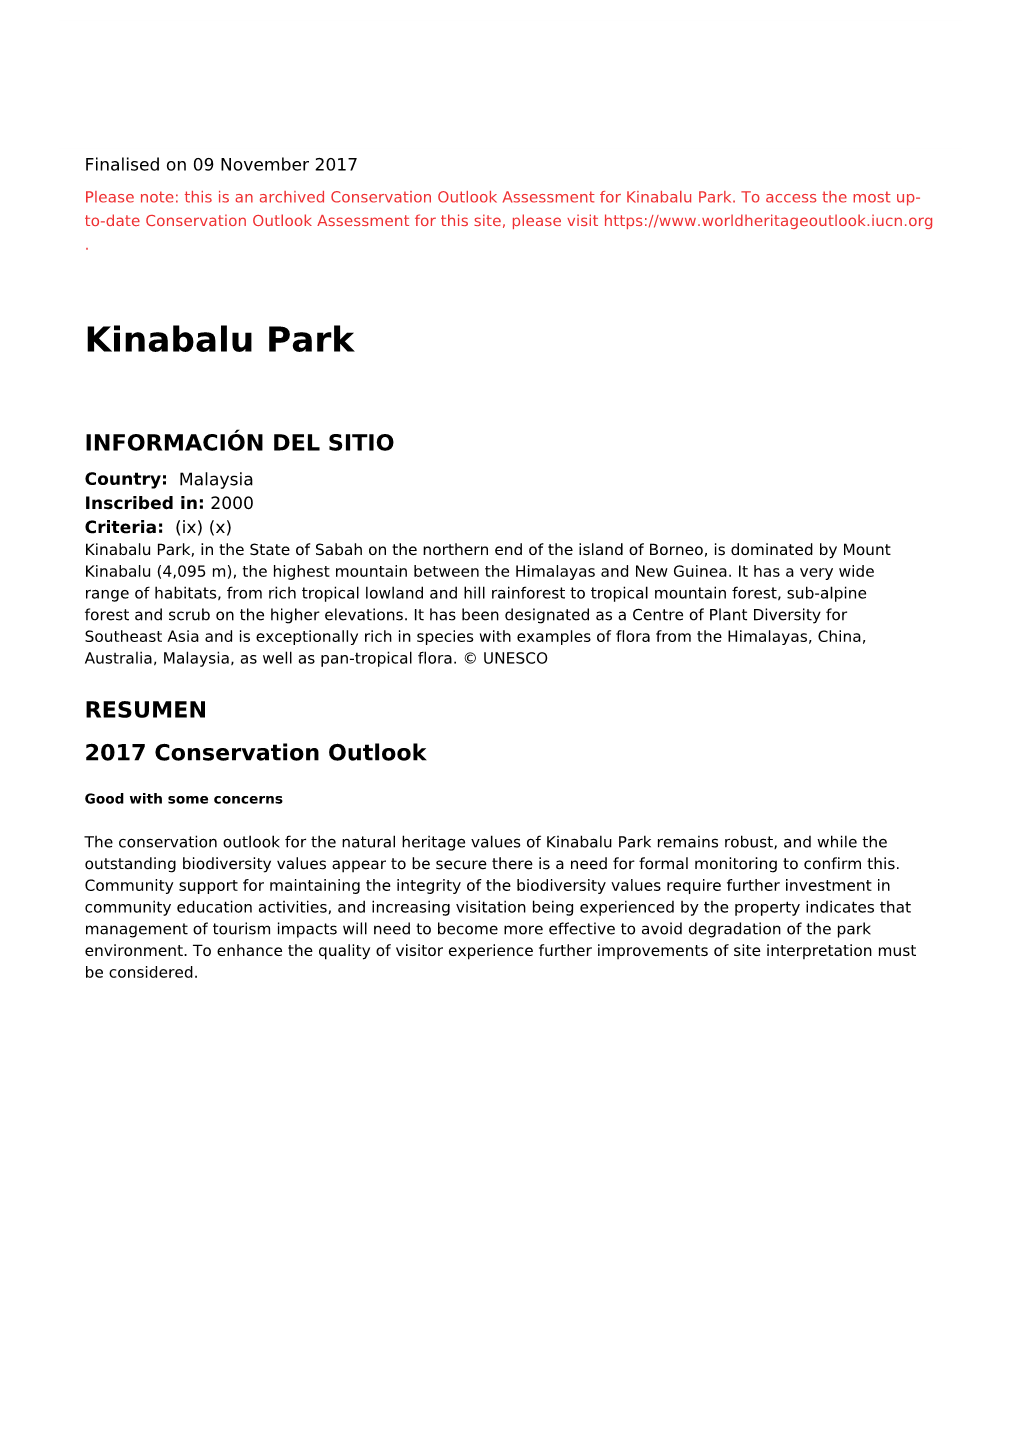 Kinabalu Park - 2017 Conservation Outlook Assessment (Archived)